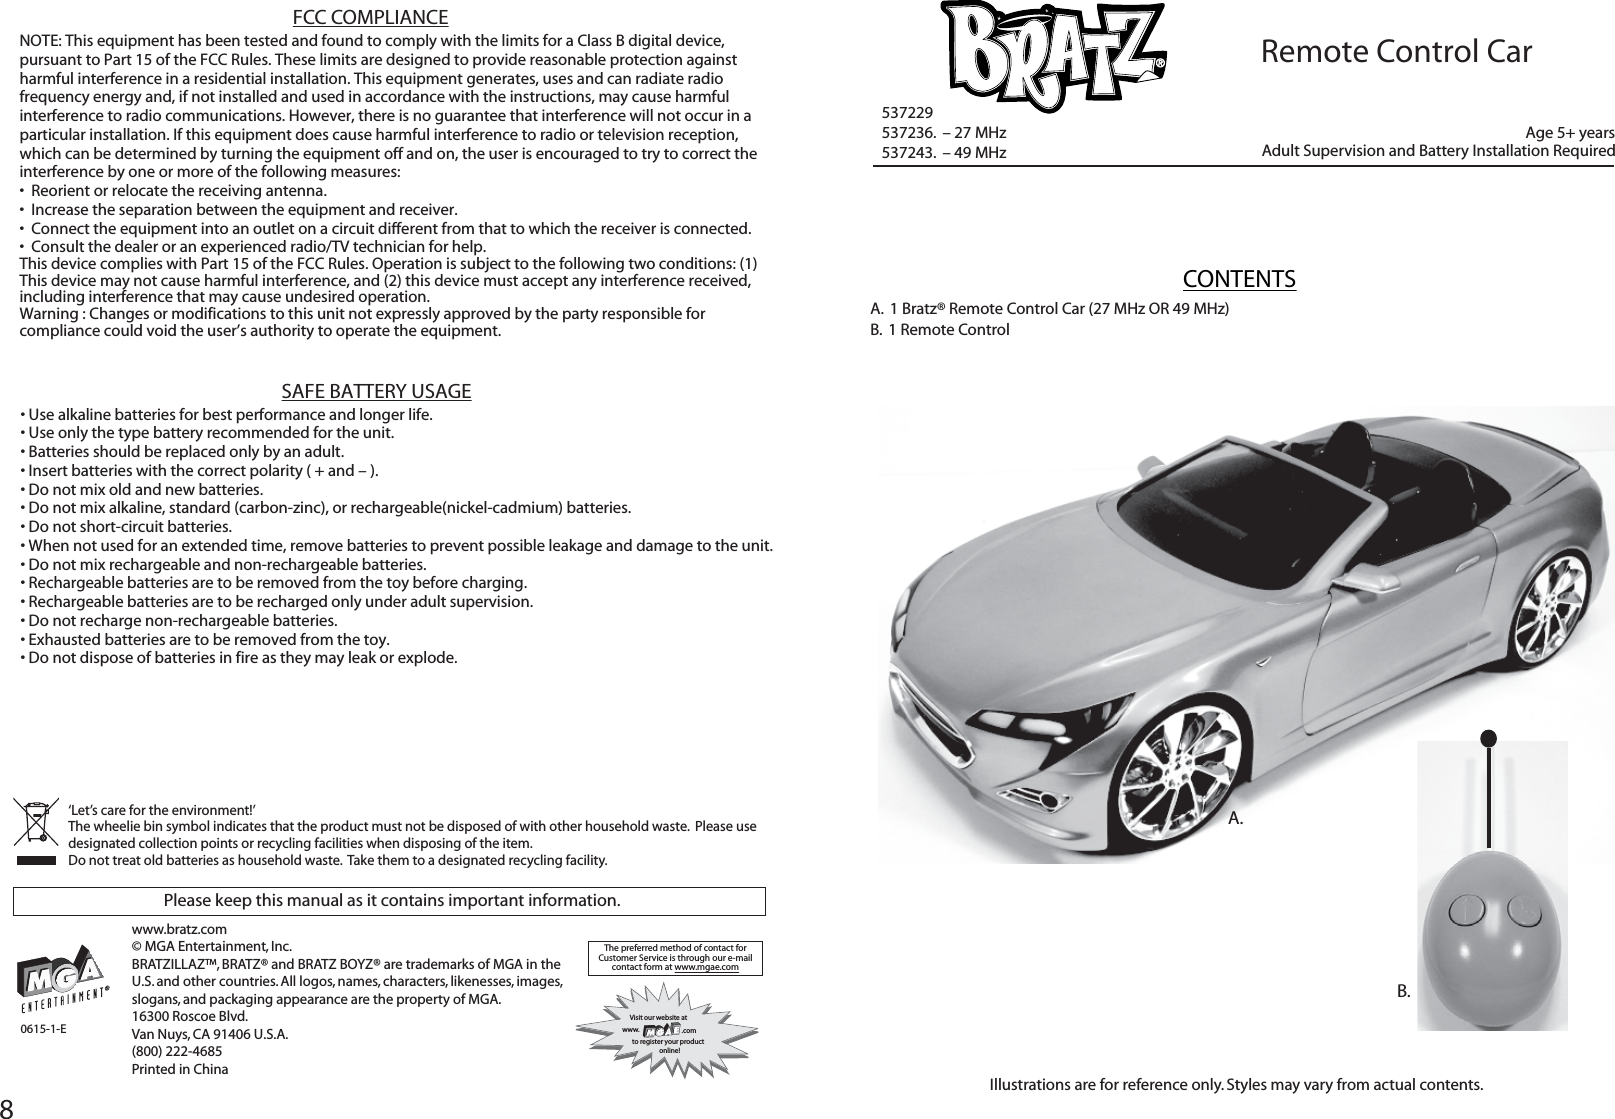 MGA Entertainment 537236 Bratz Remote Control Car-27MHz User Manual